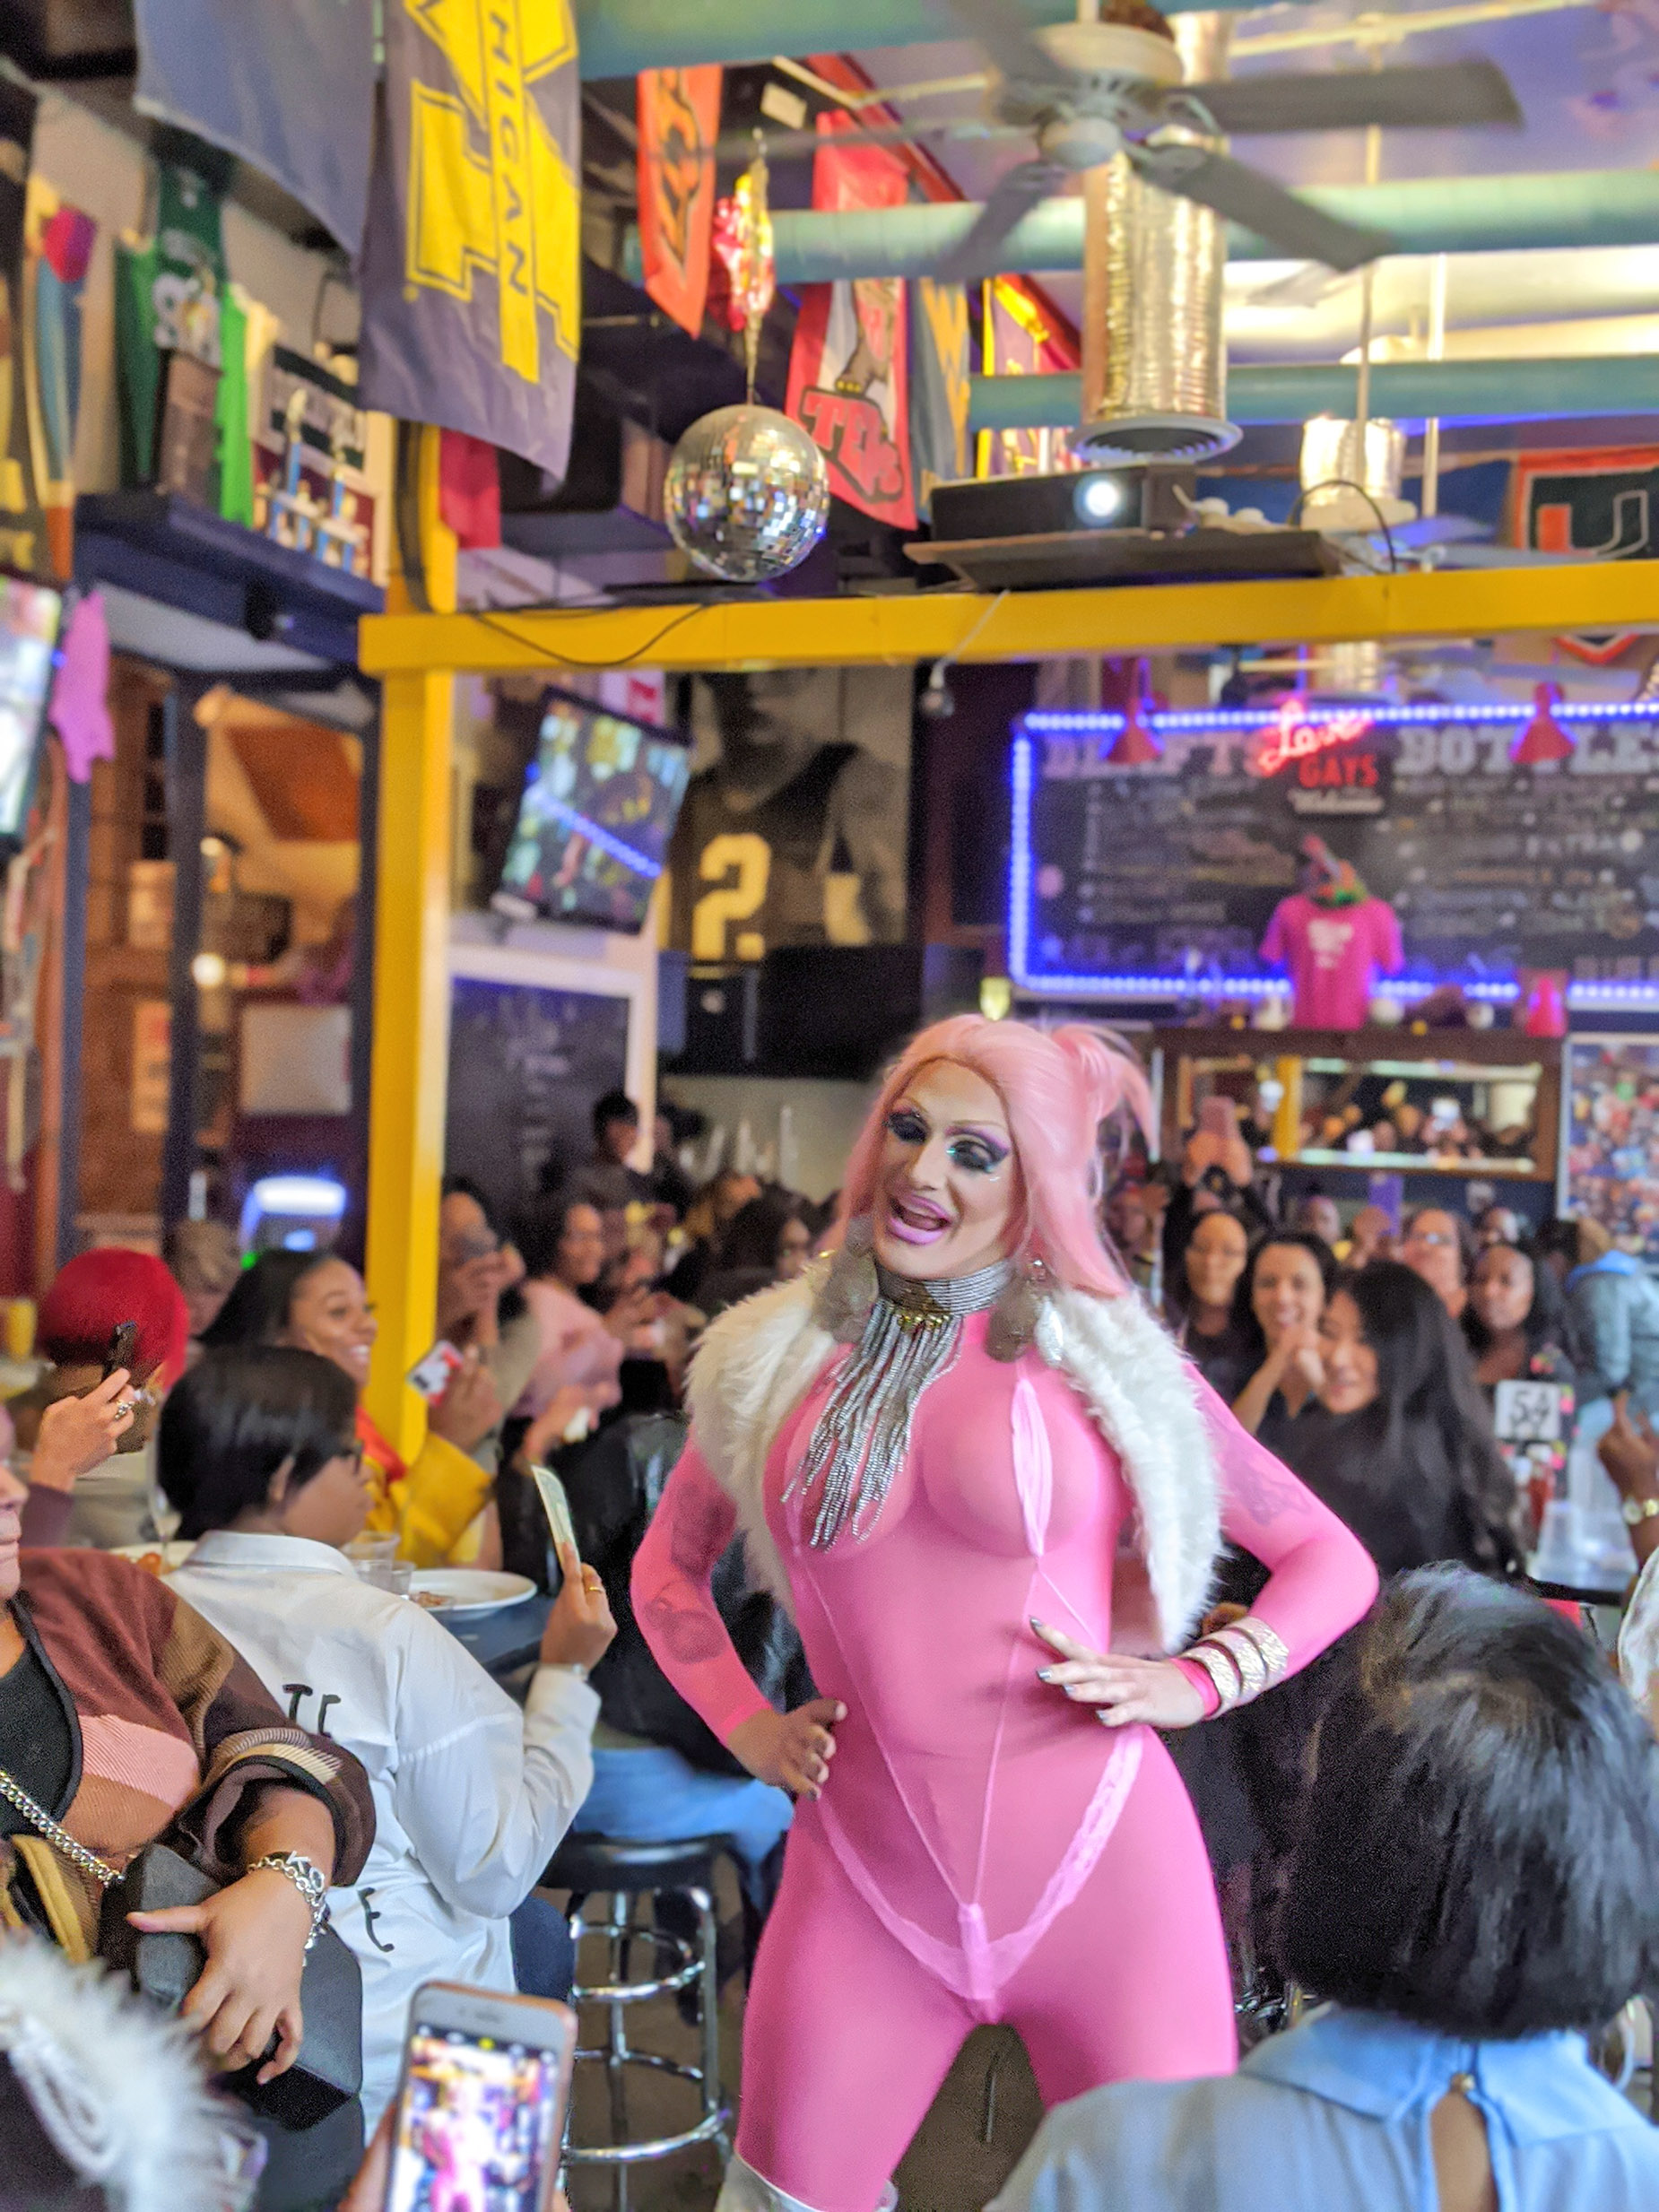 Washington DC Drag Queen Alexa Shontelle at Nellies Sports Bar drag brunch.